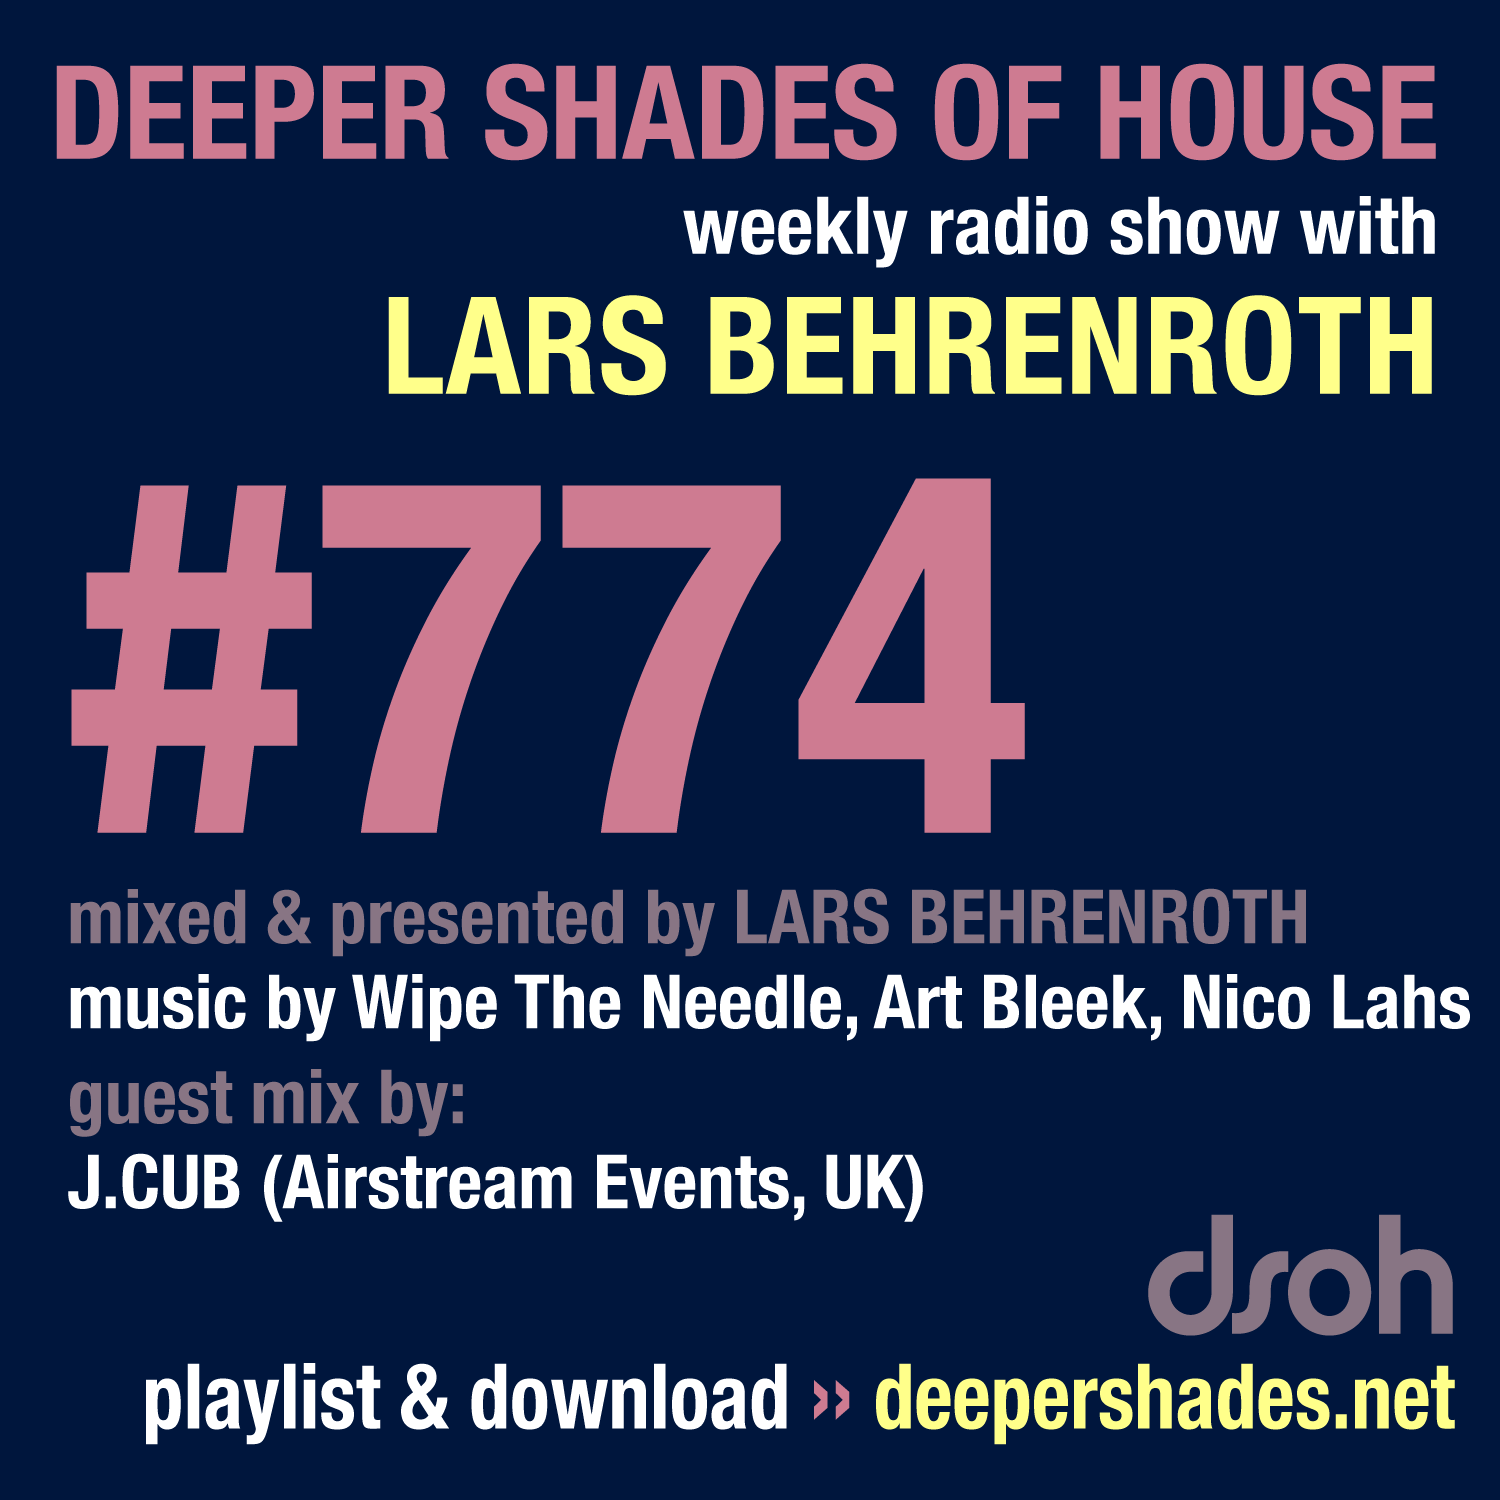 Deep House Radio Show Deeper Shades Of House 774